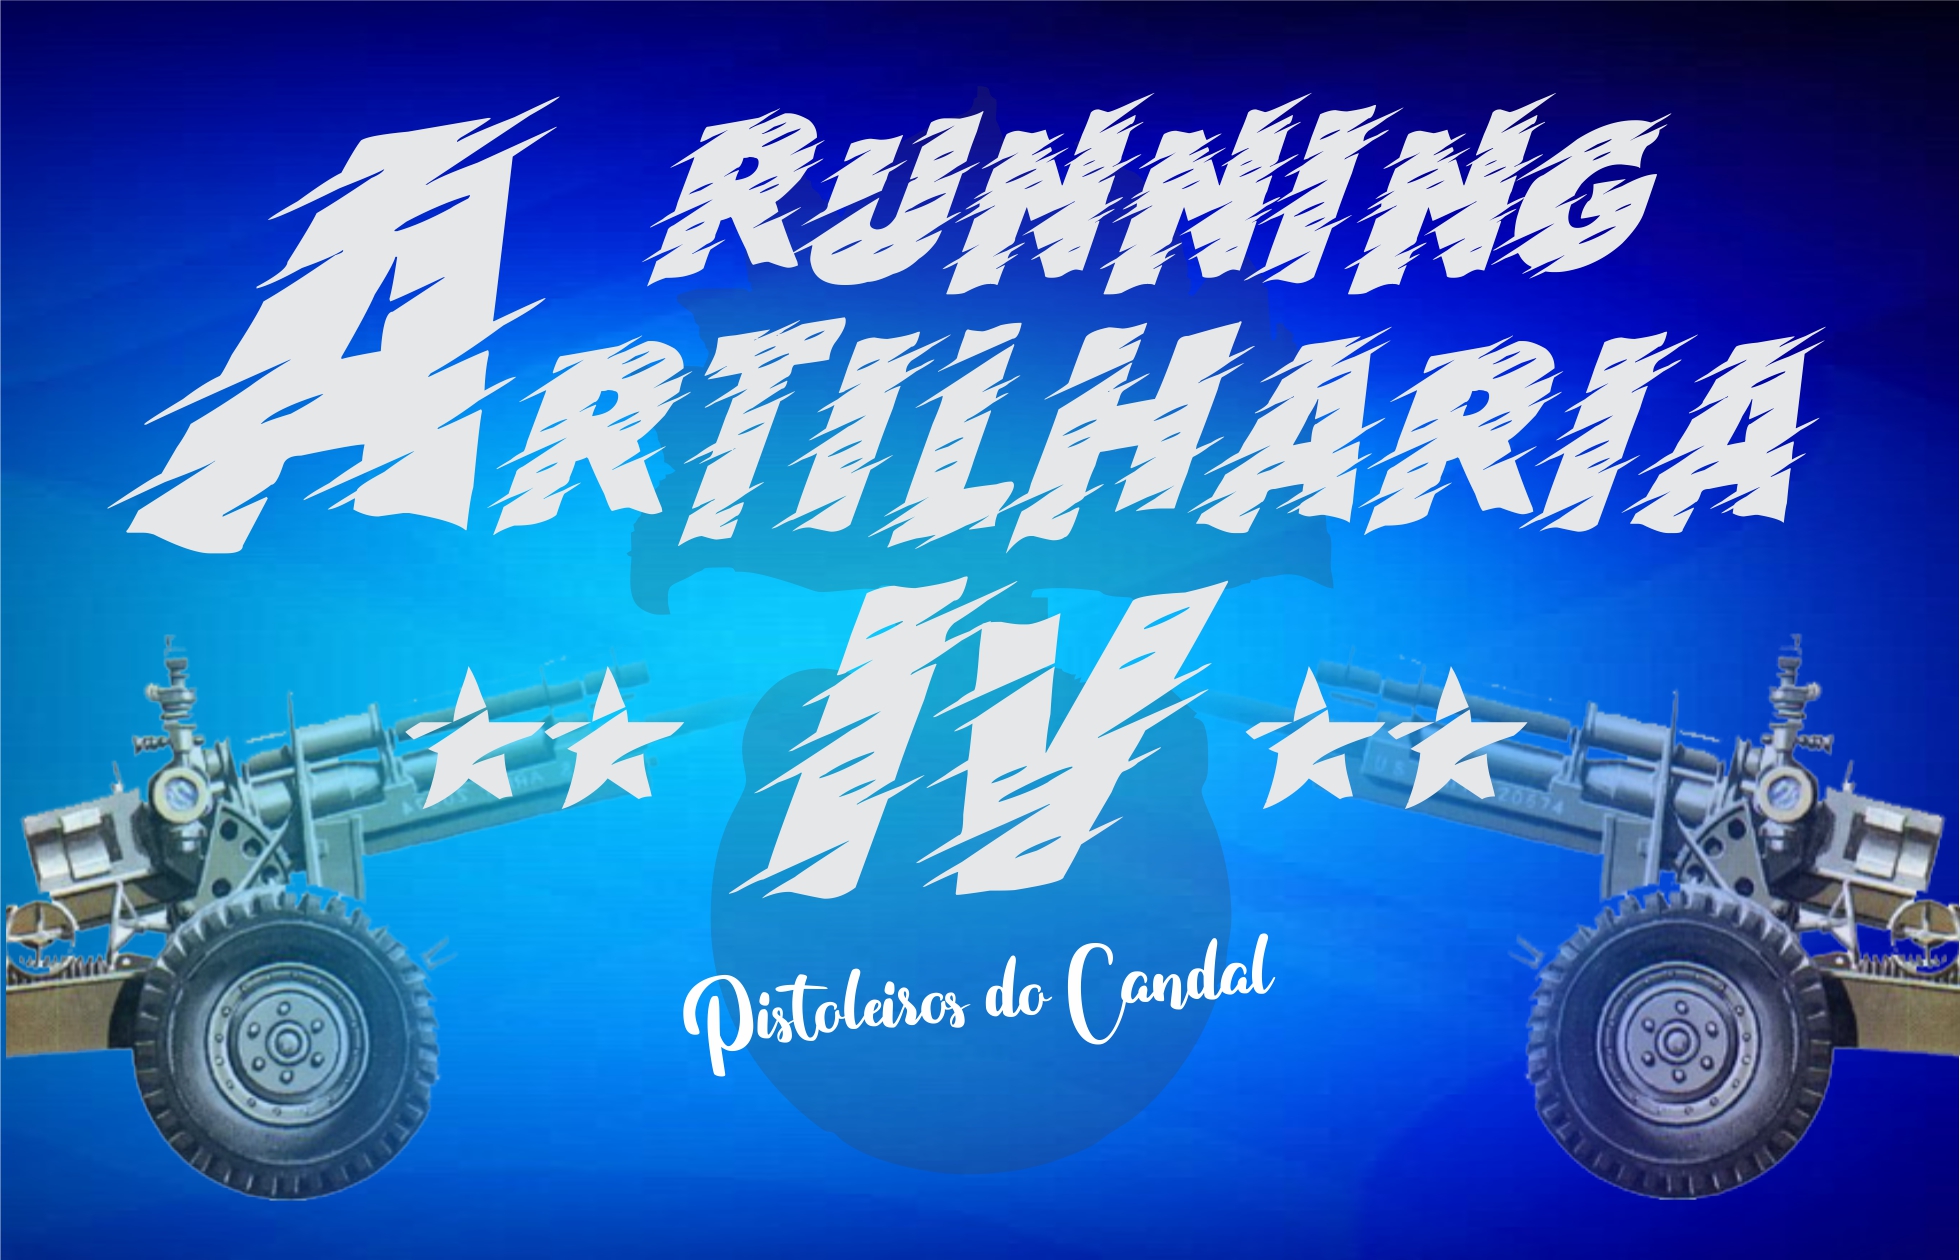 Running Artilharia IV - Pistolerios do Candal